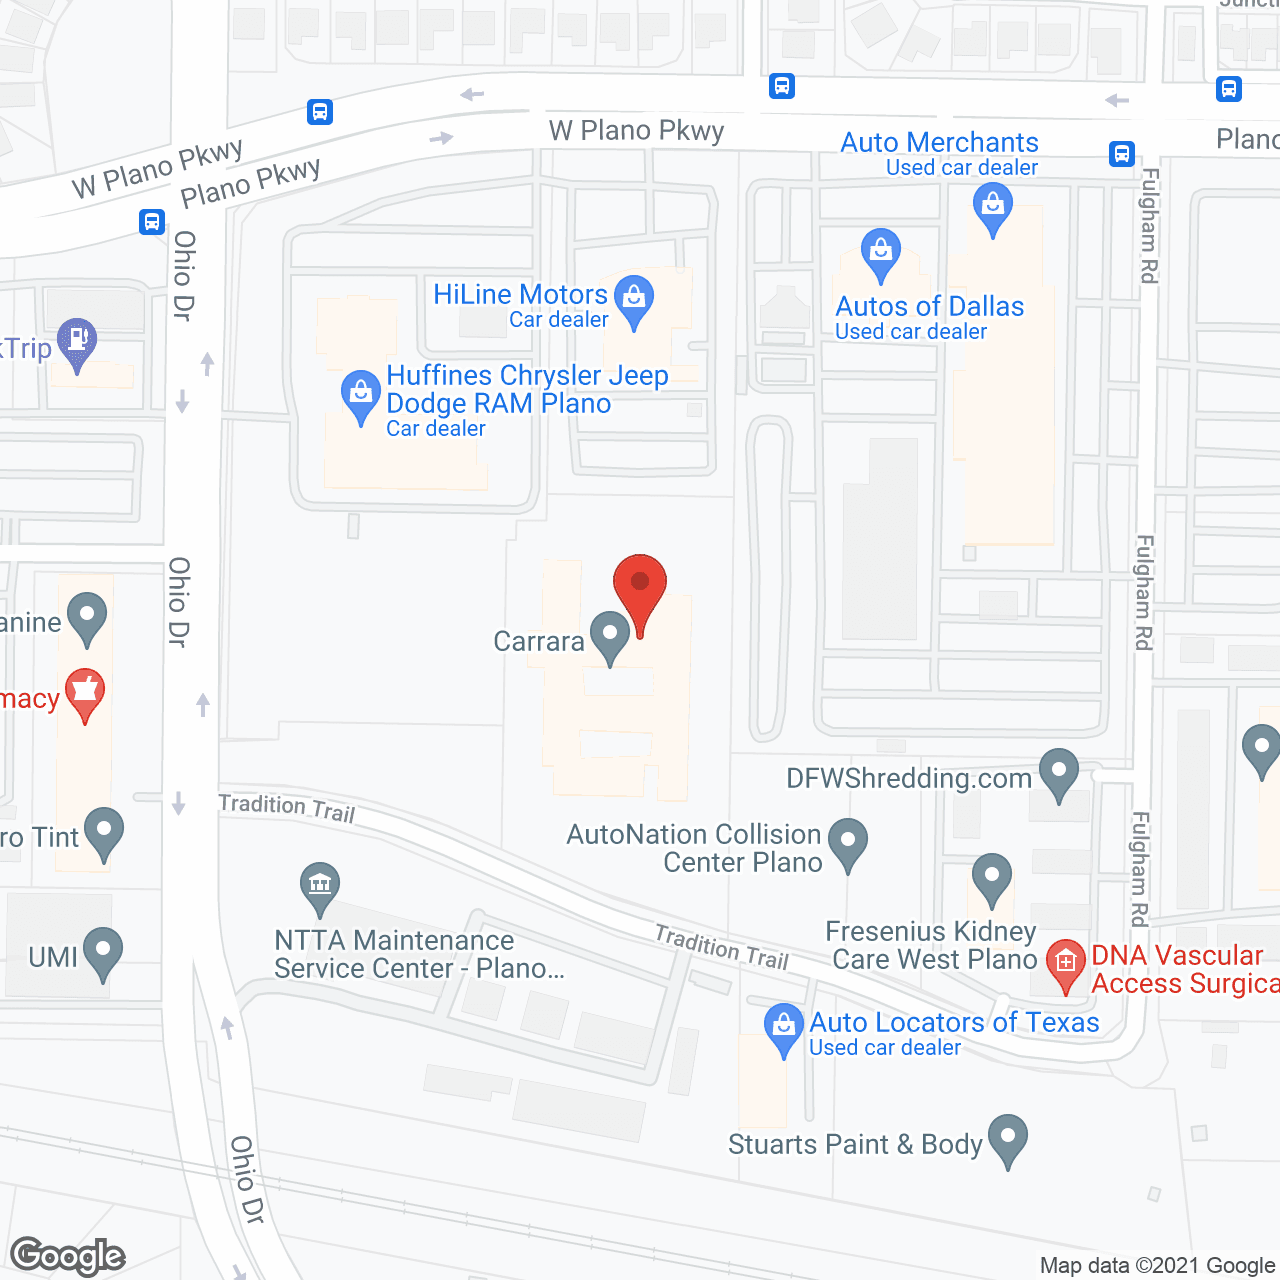 Carrara in google map